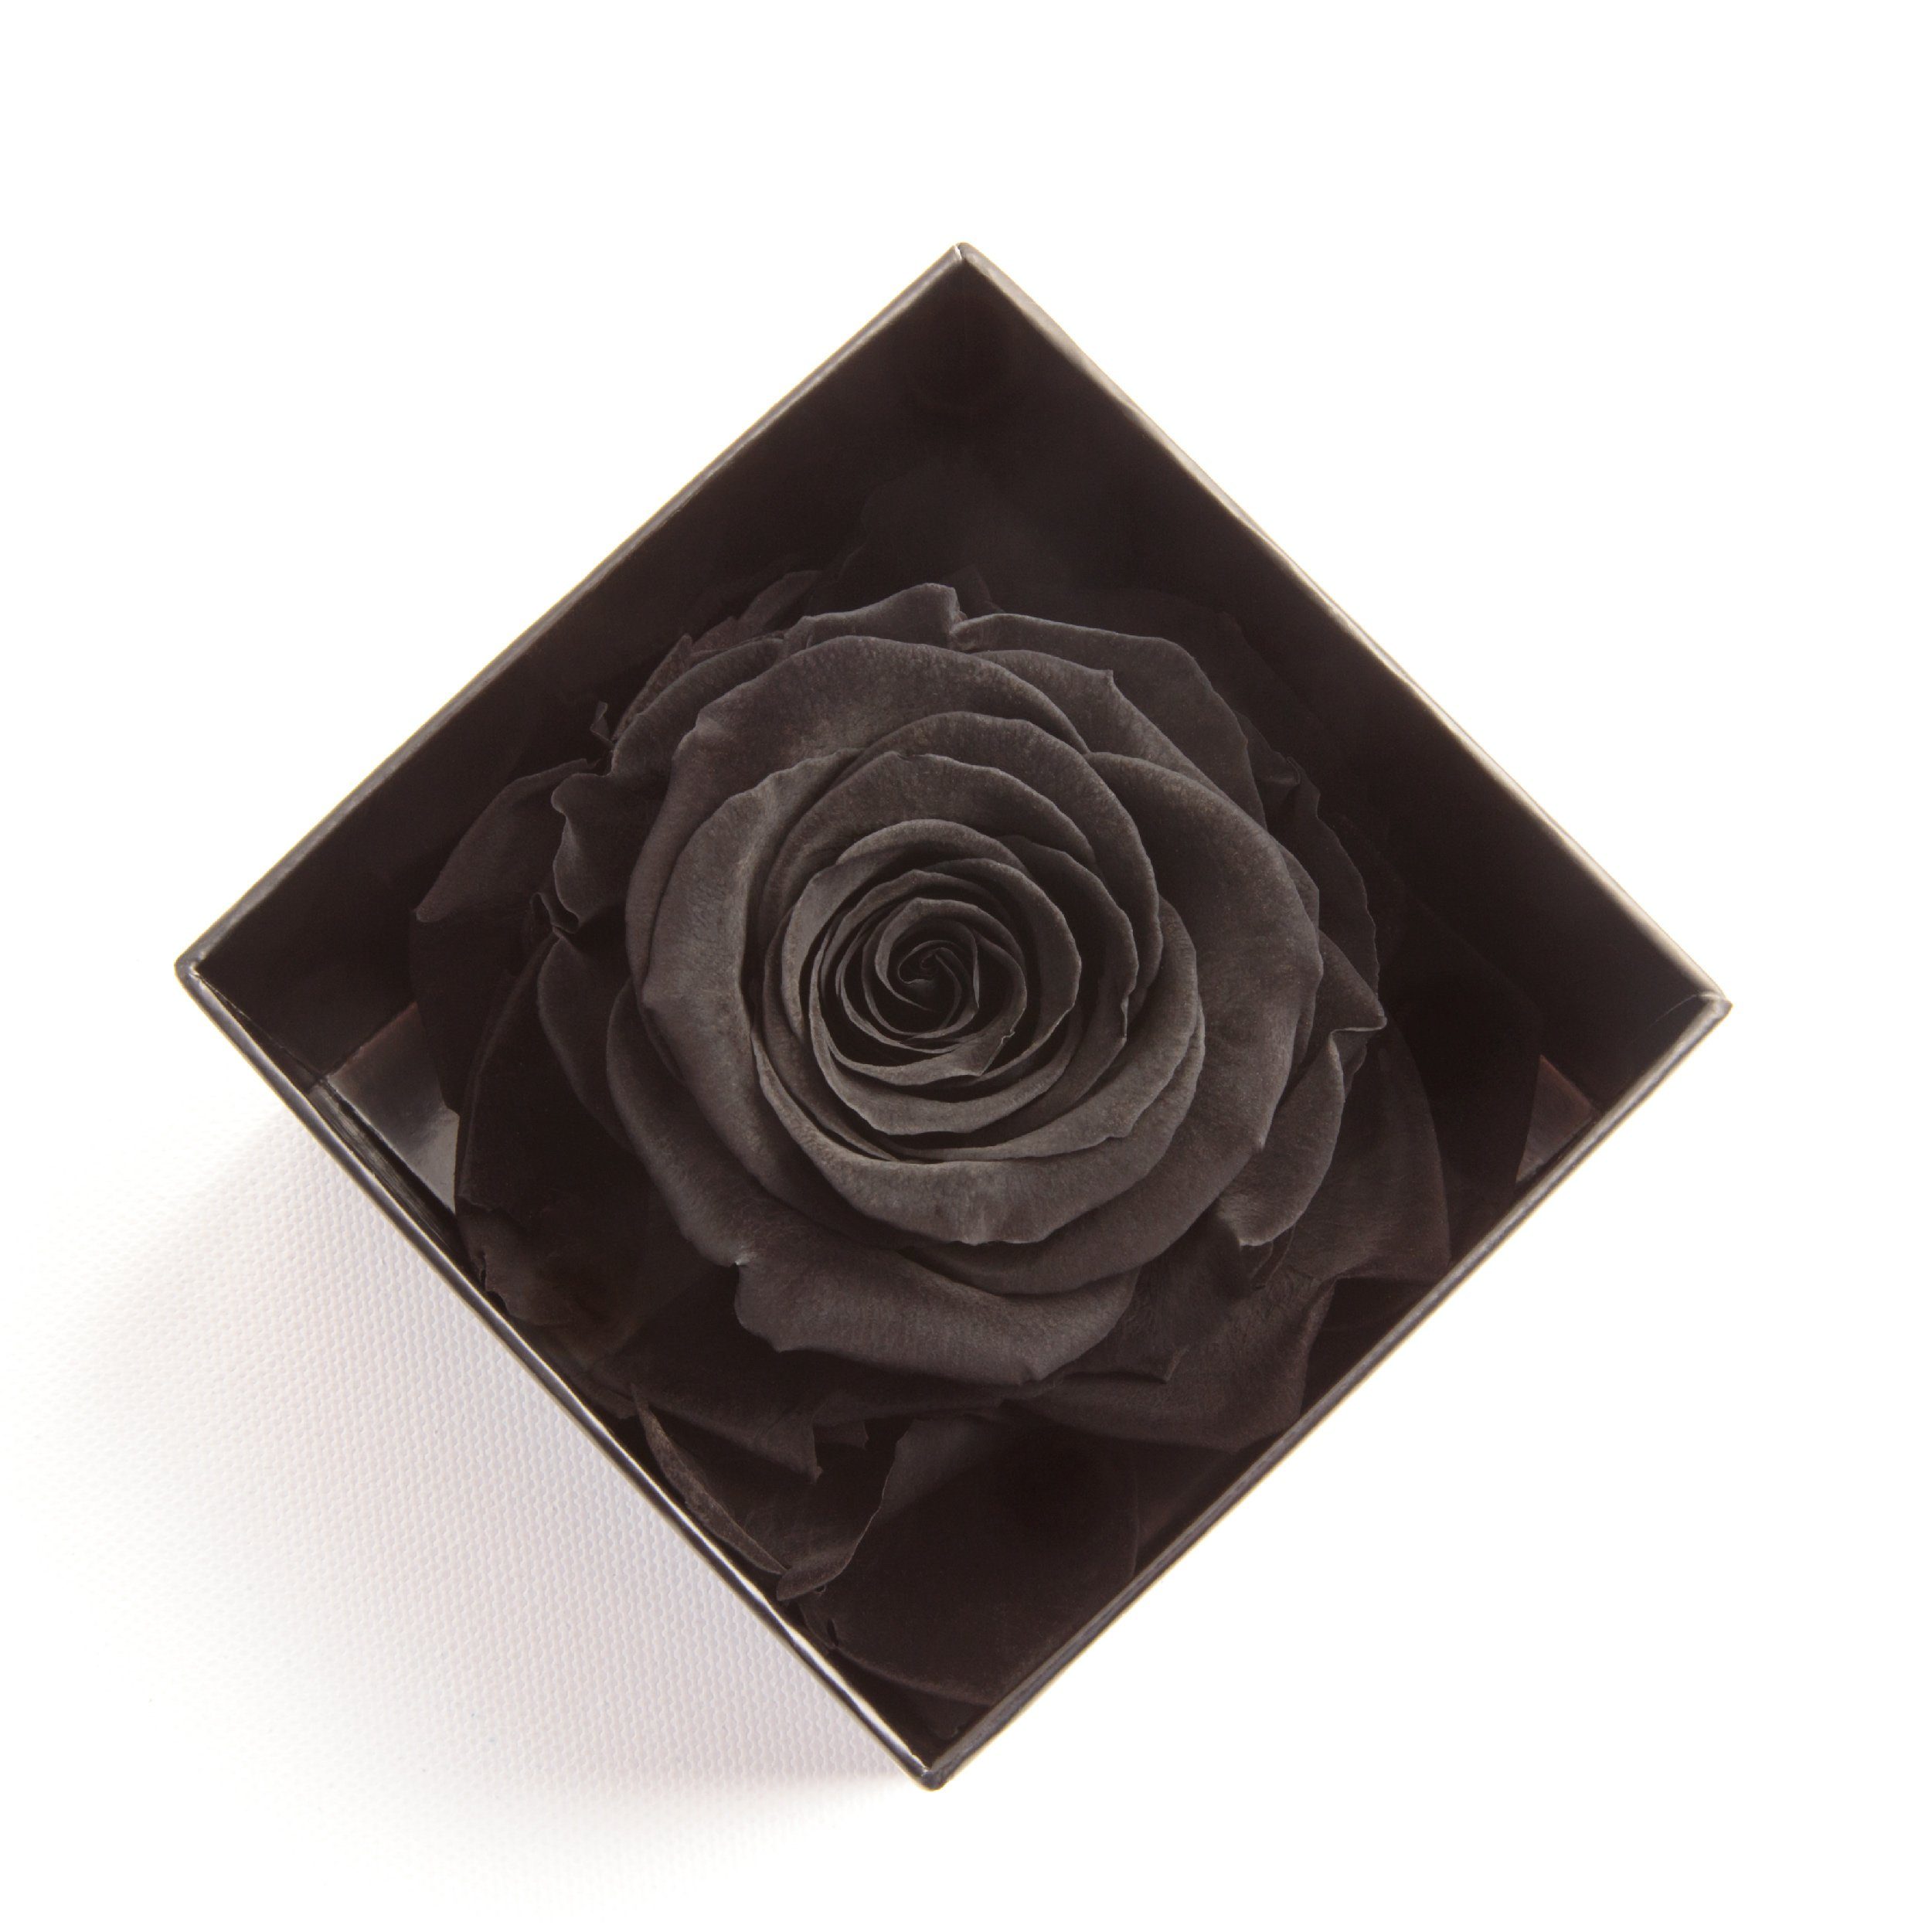 Kunstblume Infinity Rose Schwarz Höhe konserviert Liebesbeweis Box You Love cm, Geschenk Echte Rose, 6 ROSEMARIE Rose SCHULZ I Heidelberg, Idee